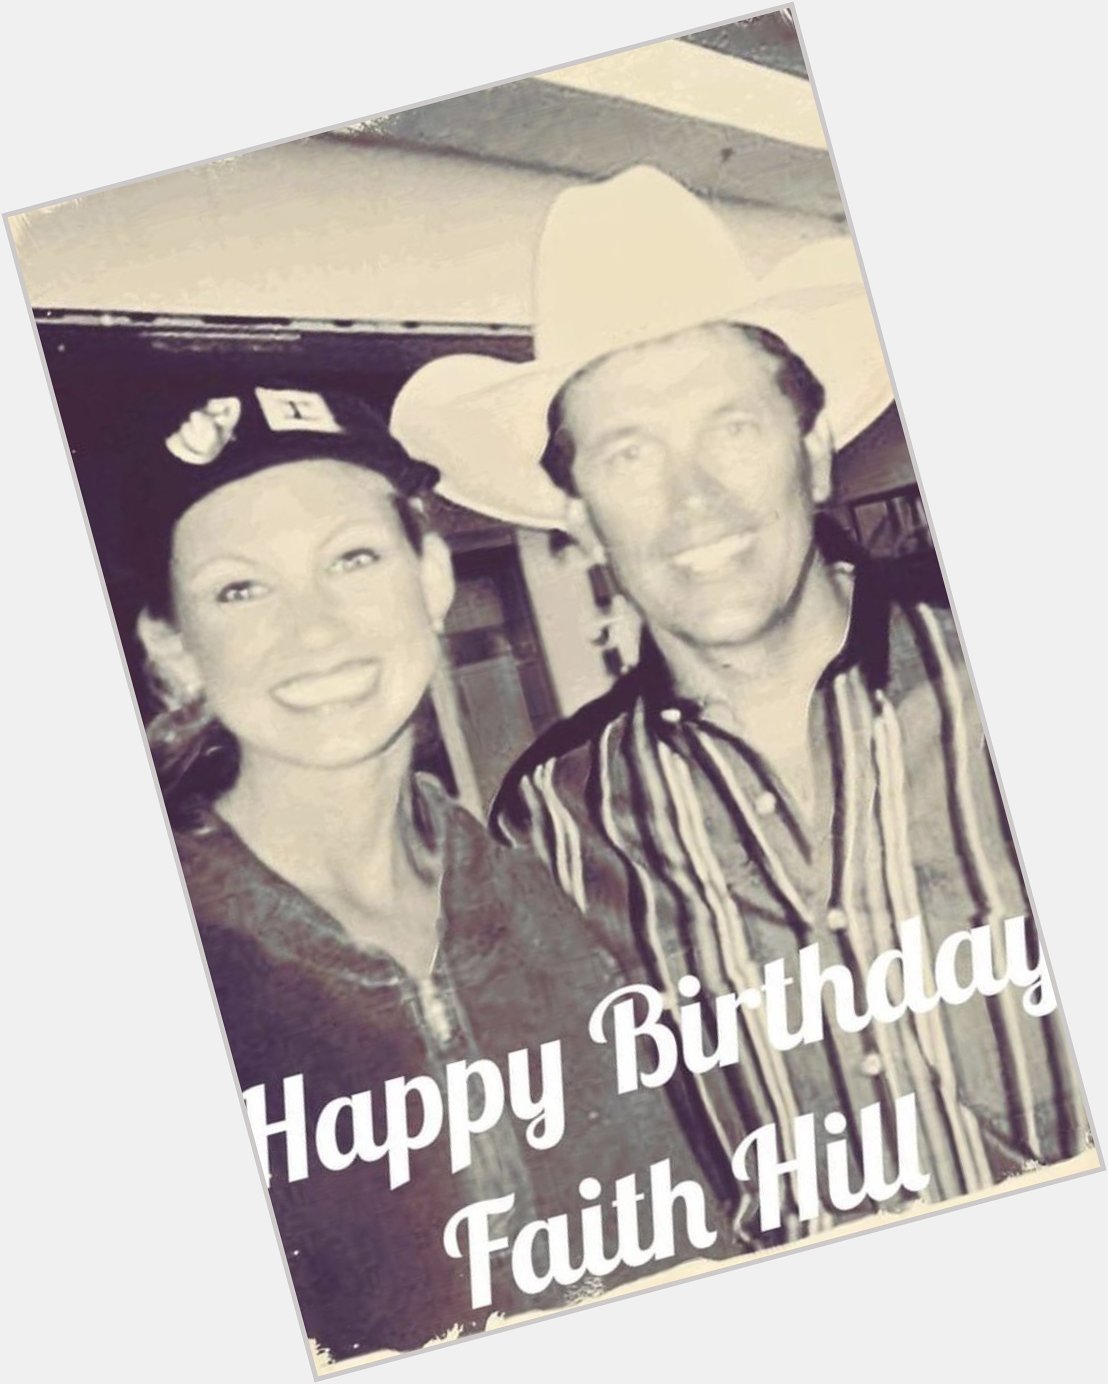 Happy birthday Faith Hill   